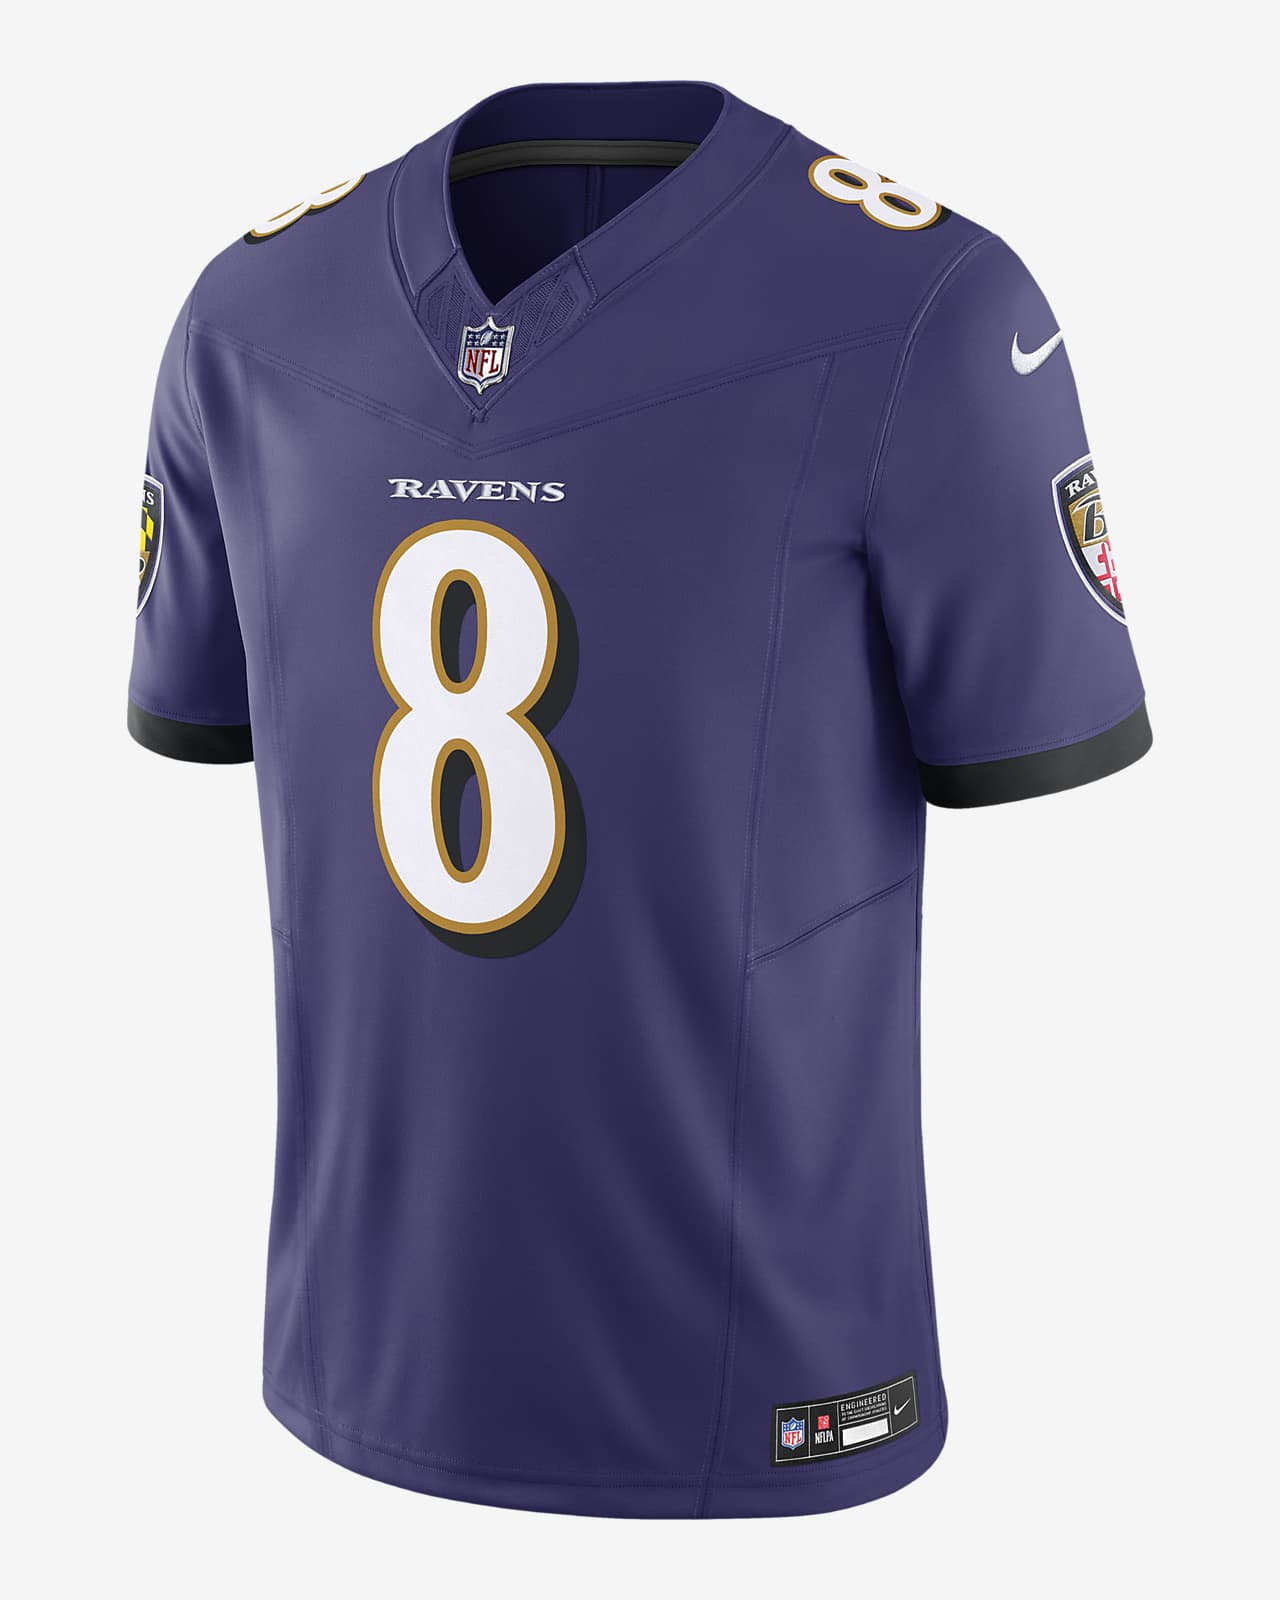 Jersey de fútbol americano Nike Dri-FIT de la NFL Limited para hombre Lamar Jackson Baltimore Ravens